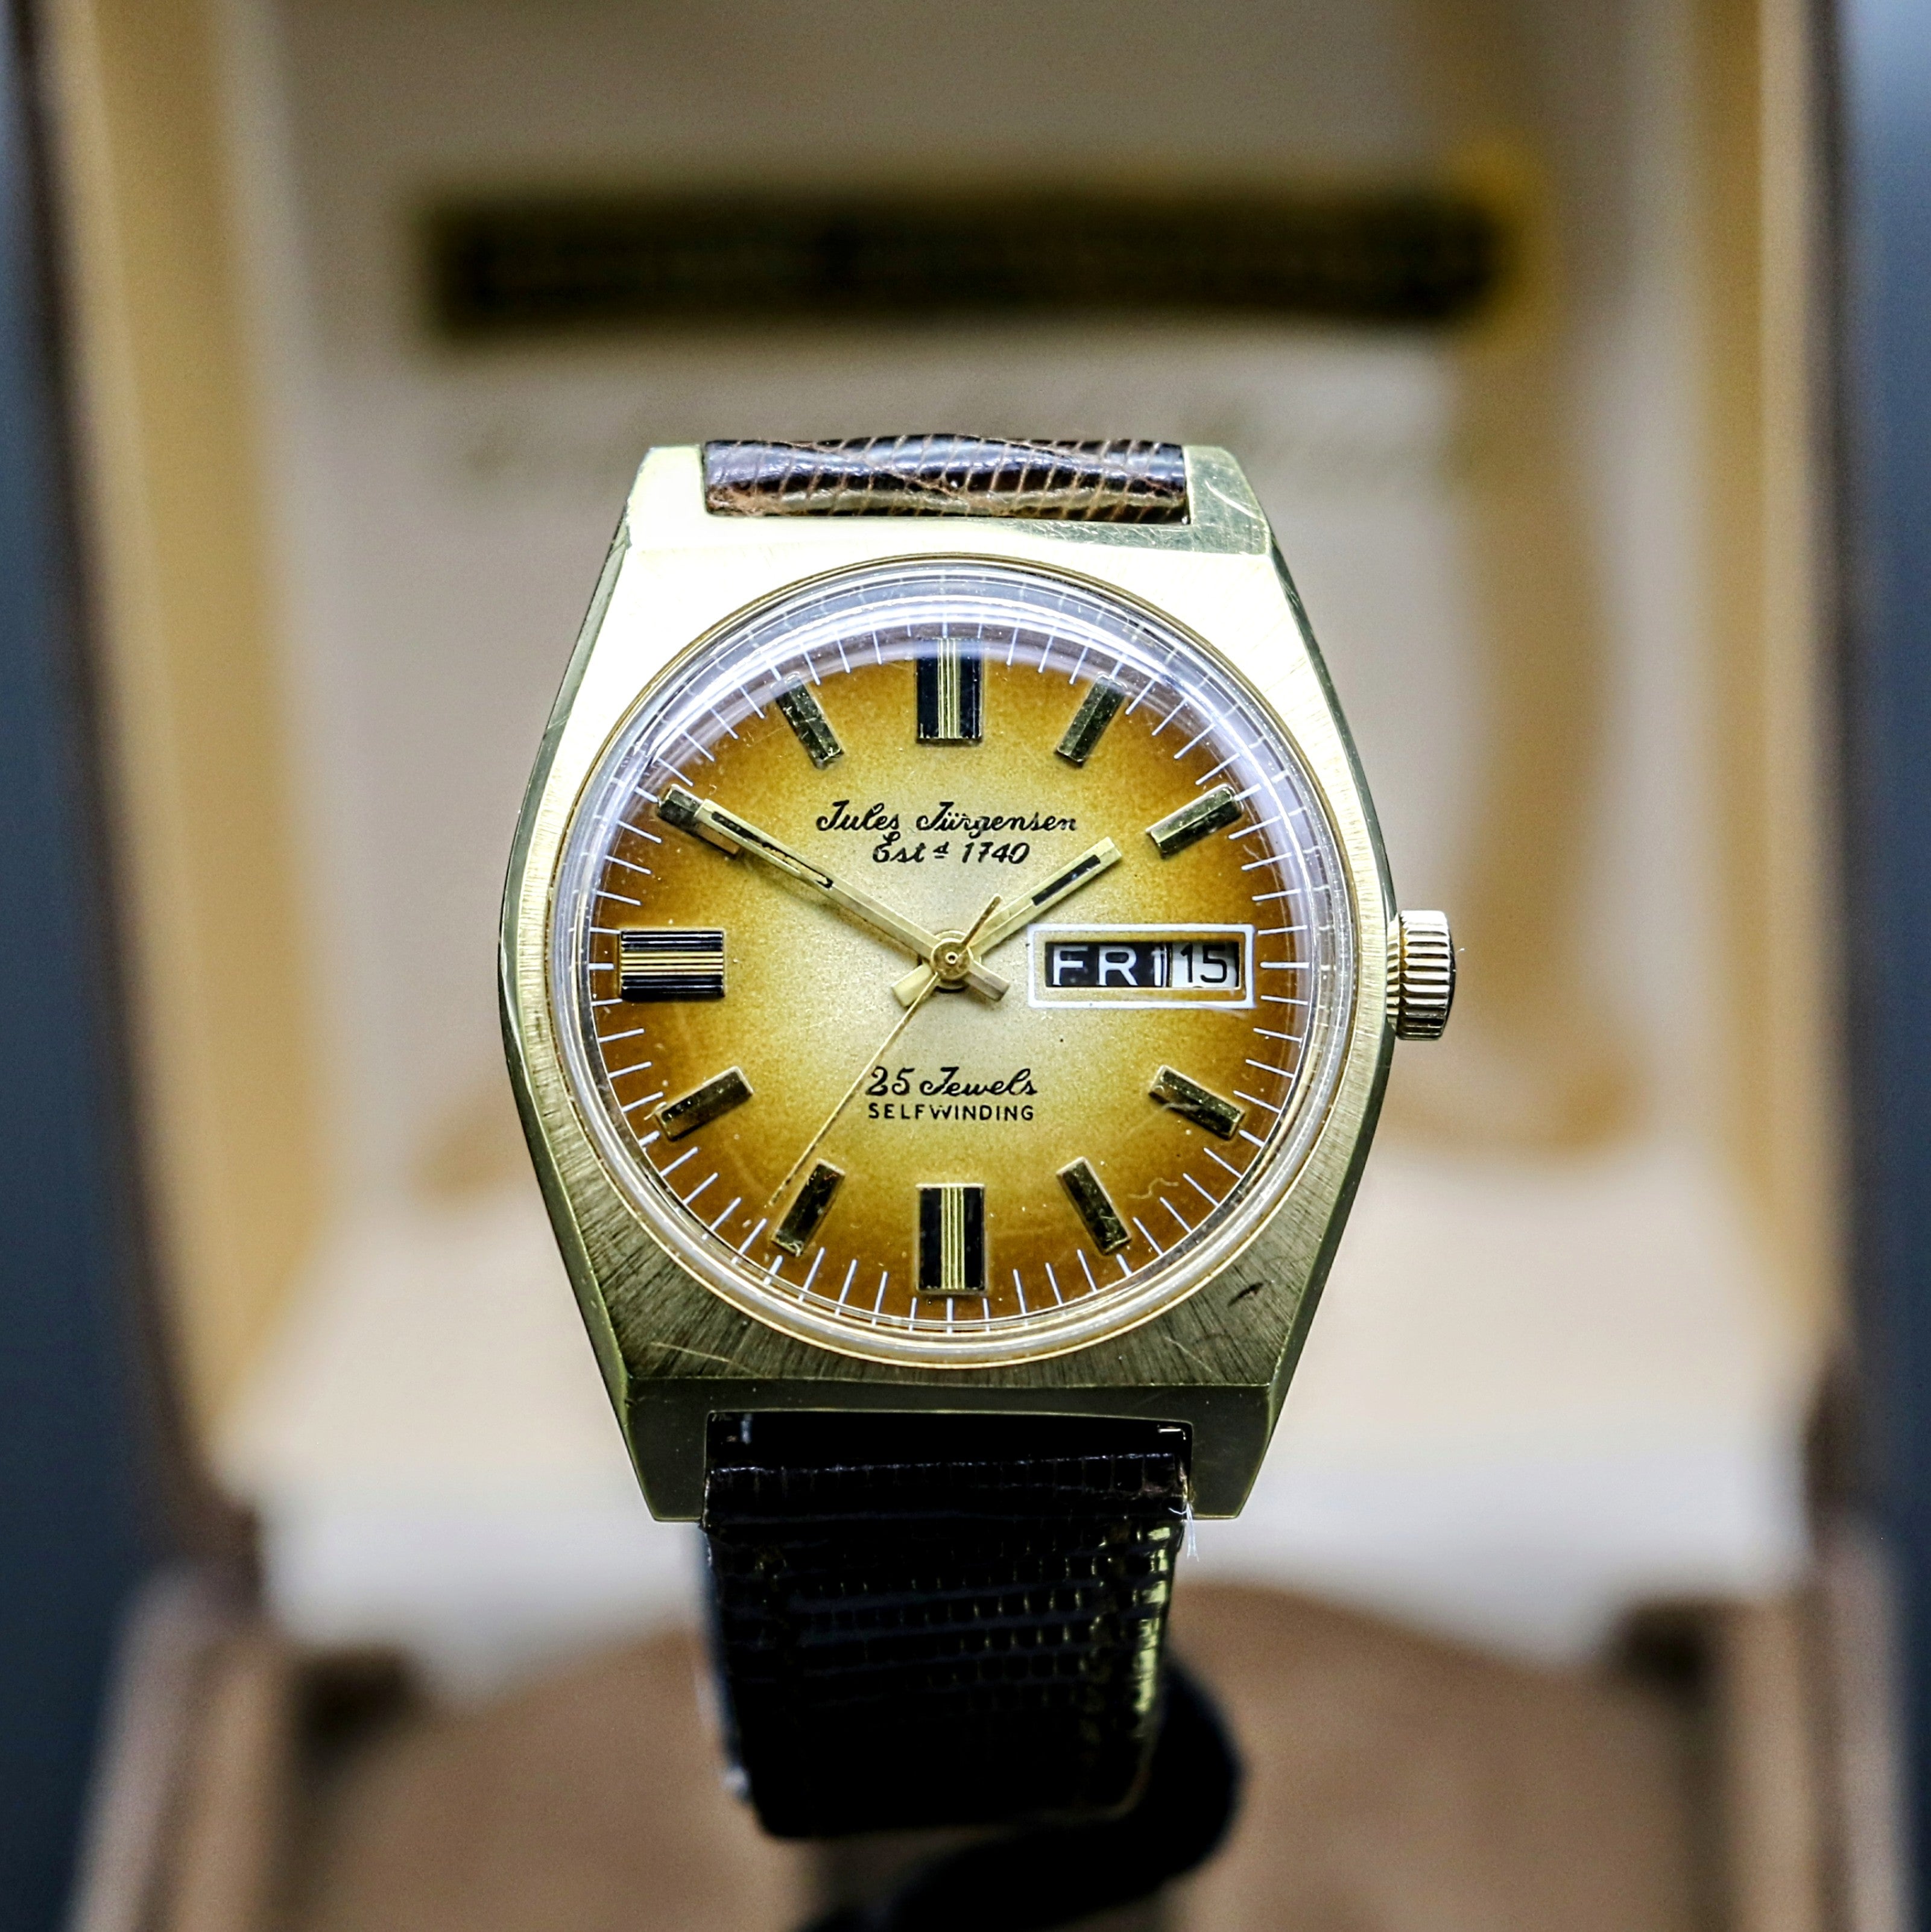 JULES JURGENSEN Swiss Automatic Wristwatch Caliber Int. 7523 25J Day/Date Watch